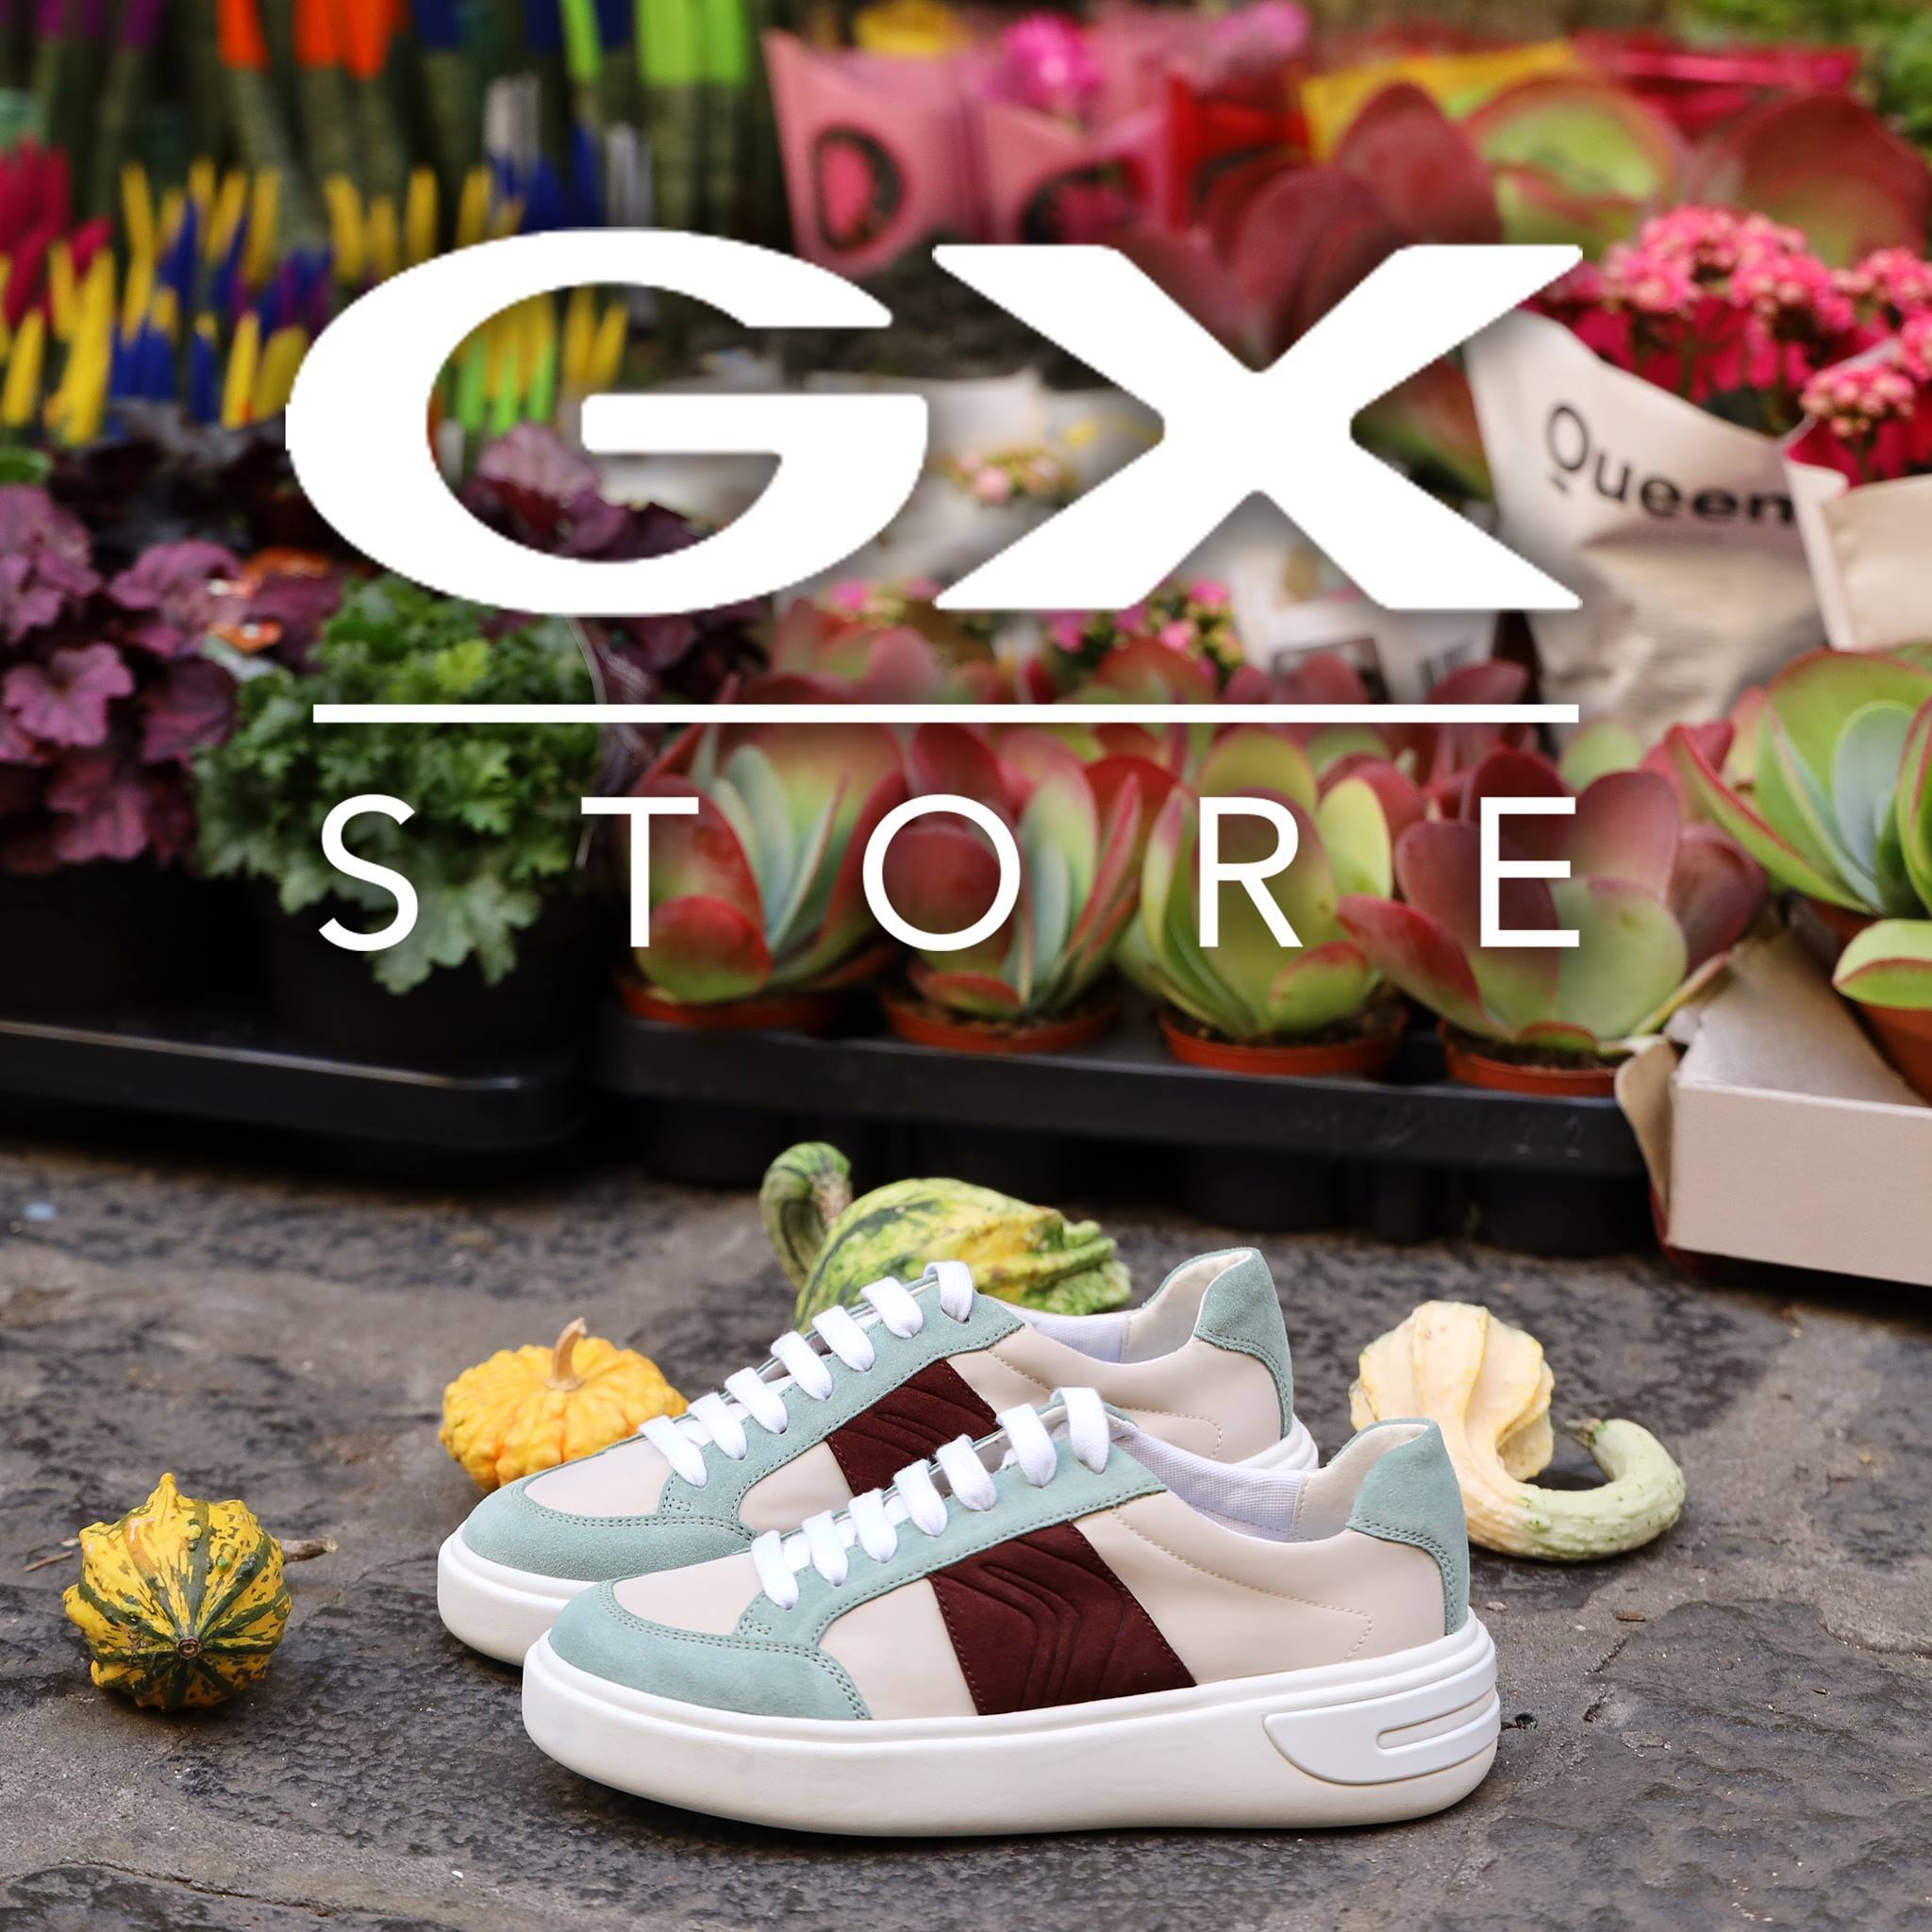 Geox store